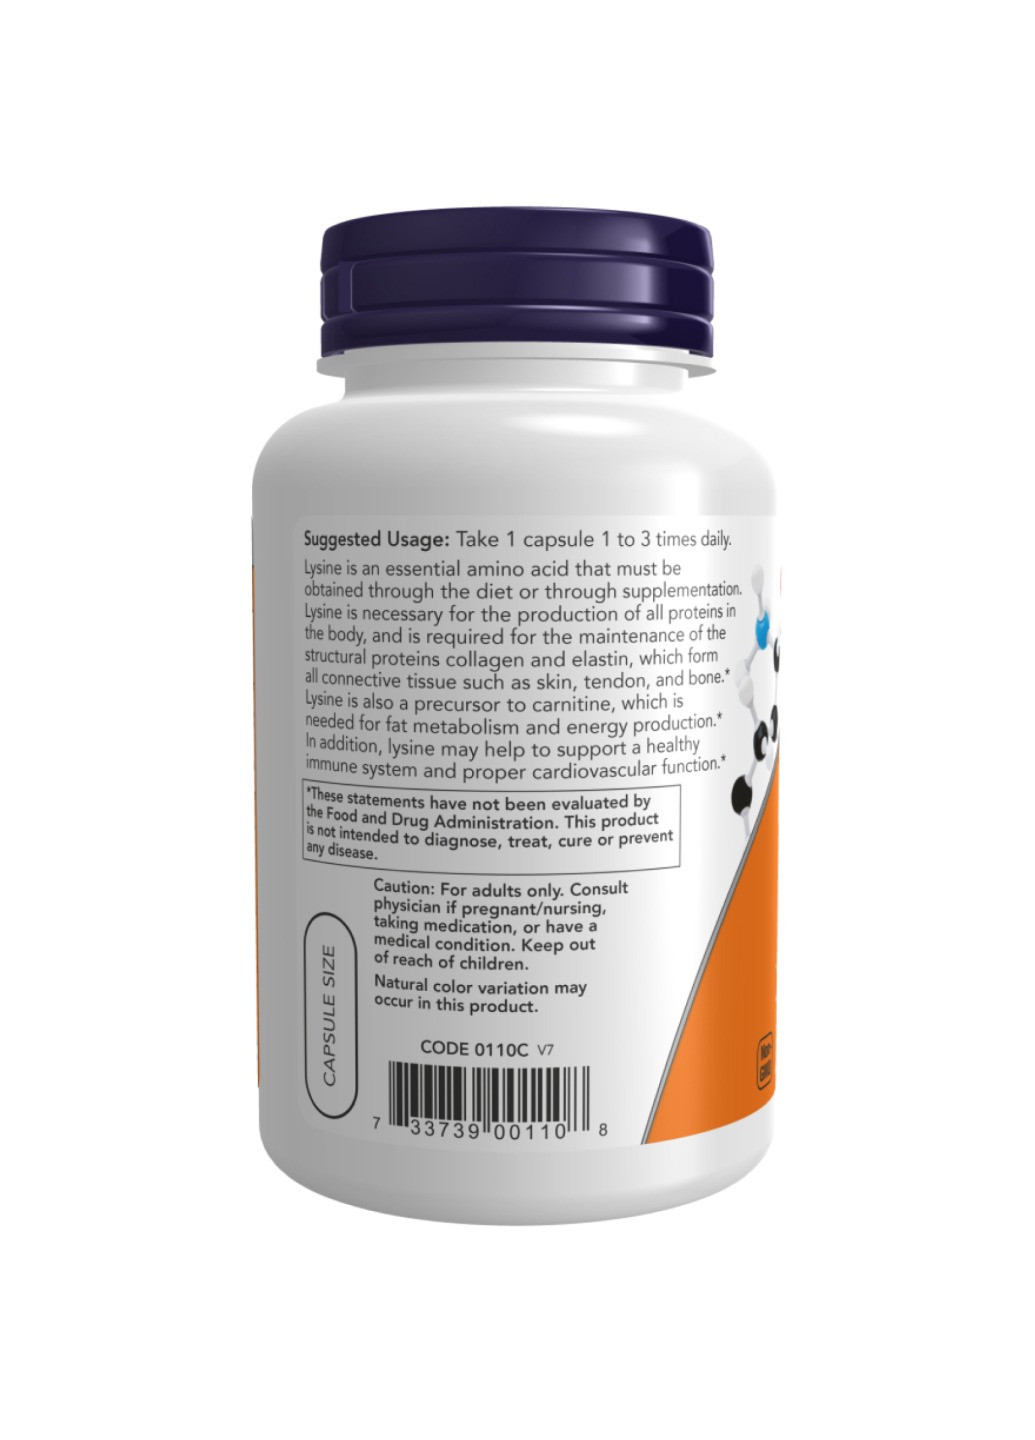 Лизин Lysine 500mg - 250 vcaps Now Foods (273182975)